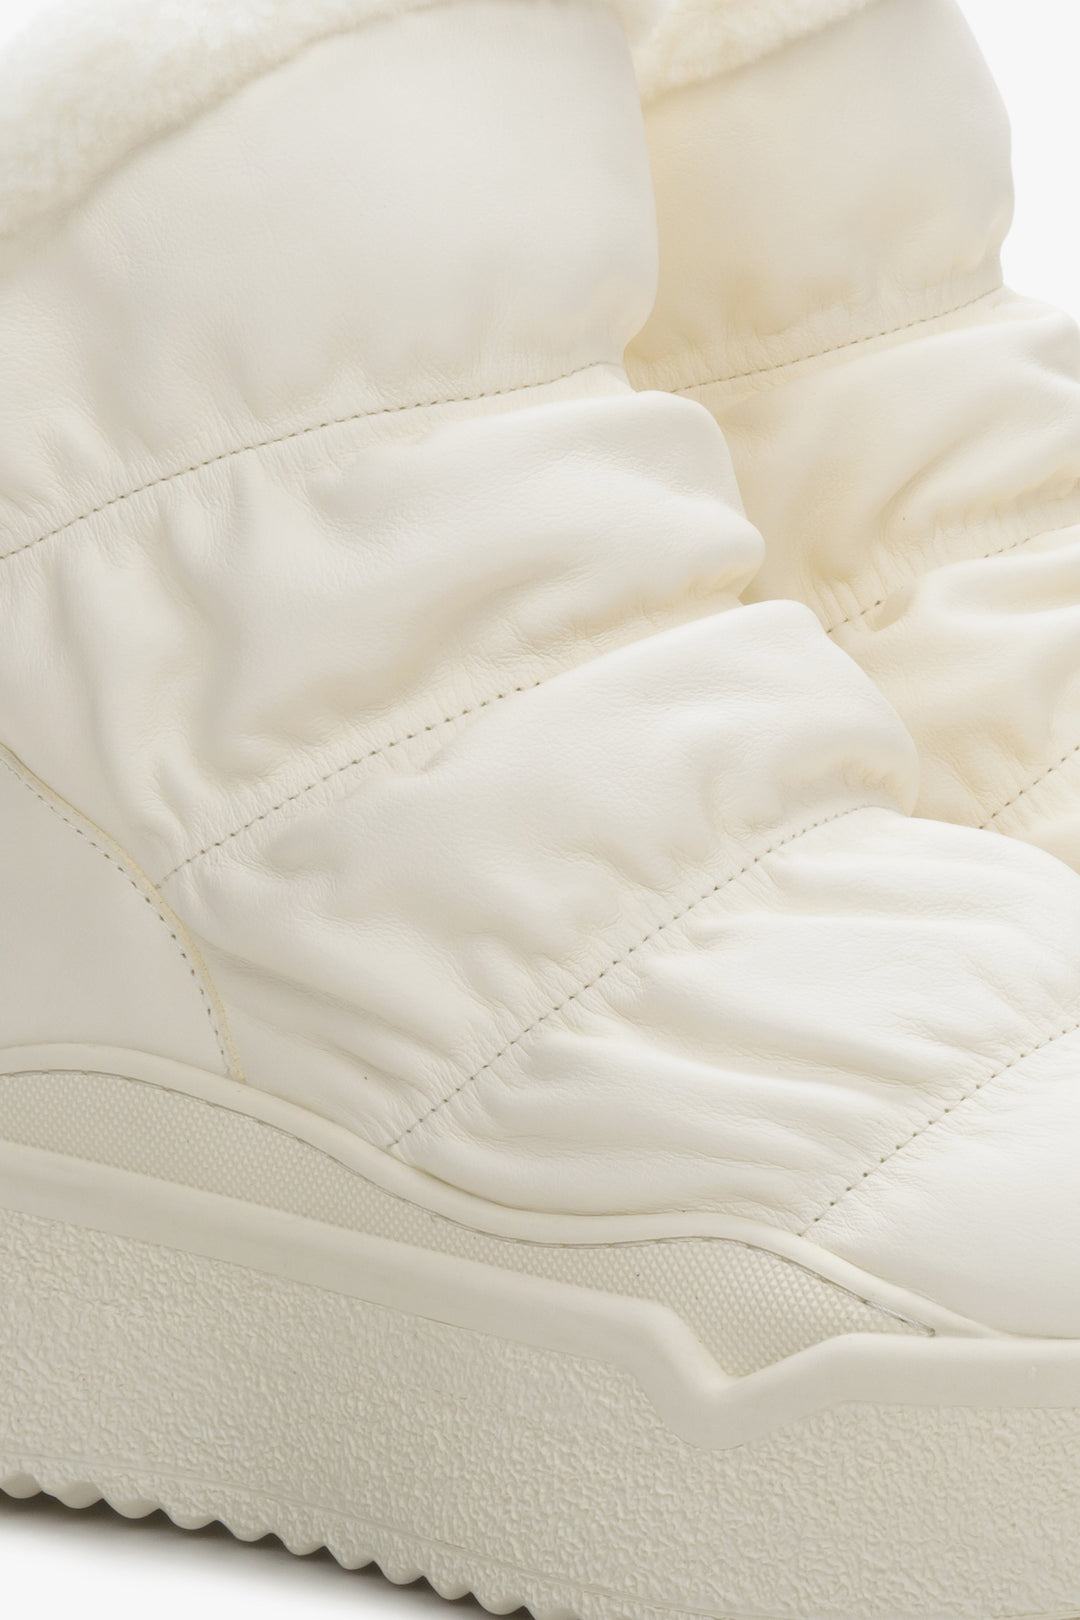 Women's snow boots in light beige Estro - a close-up on details.